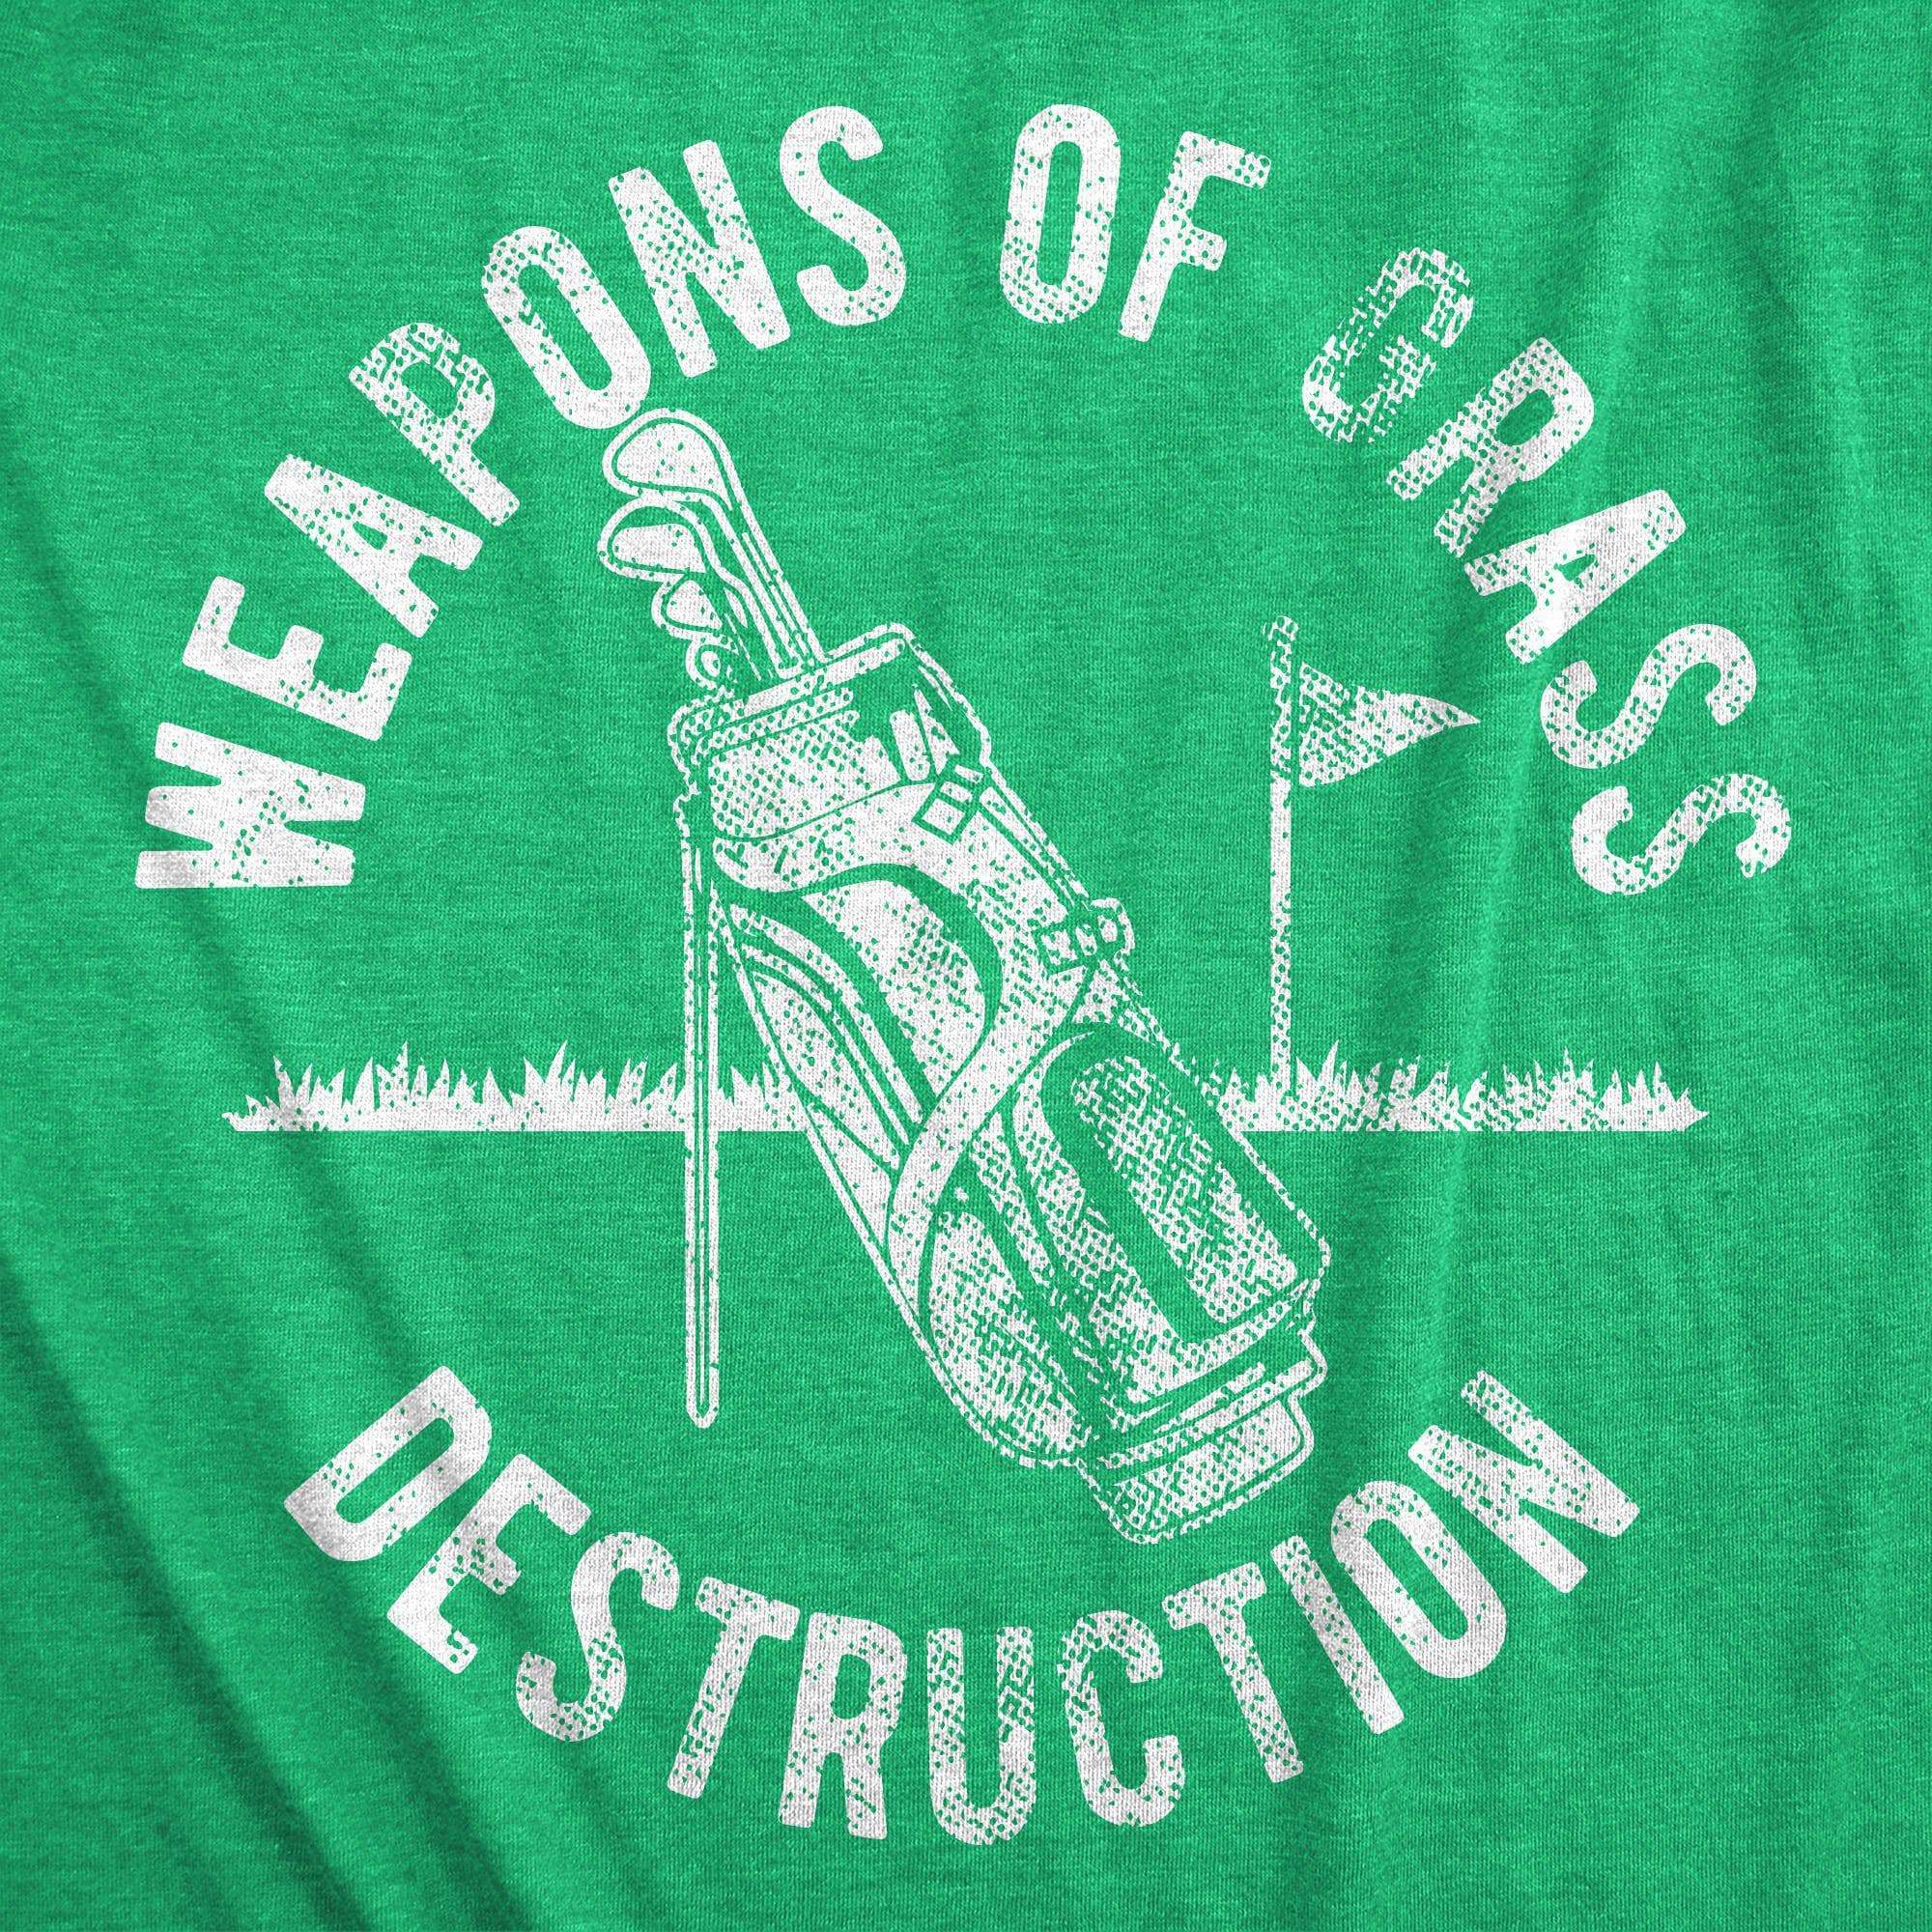 Weapons Of Grass Destruction Men's Tshirt - Crazy Dog T-Shirts